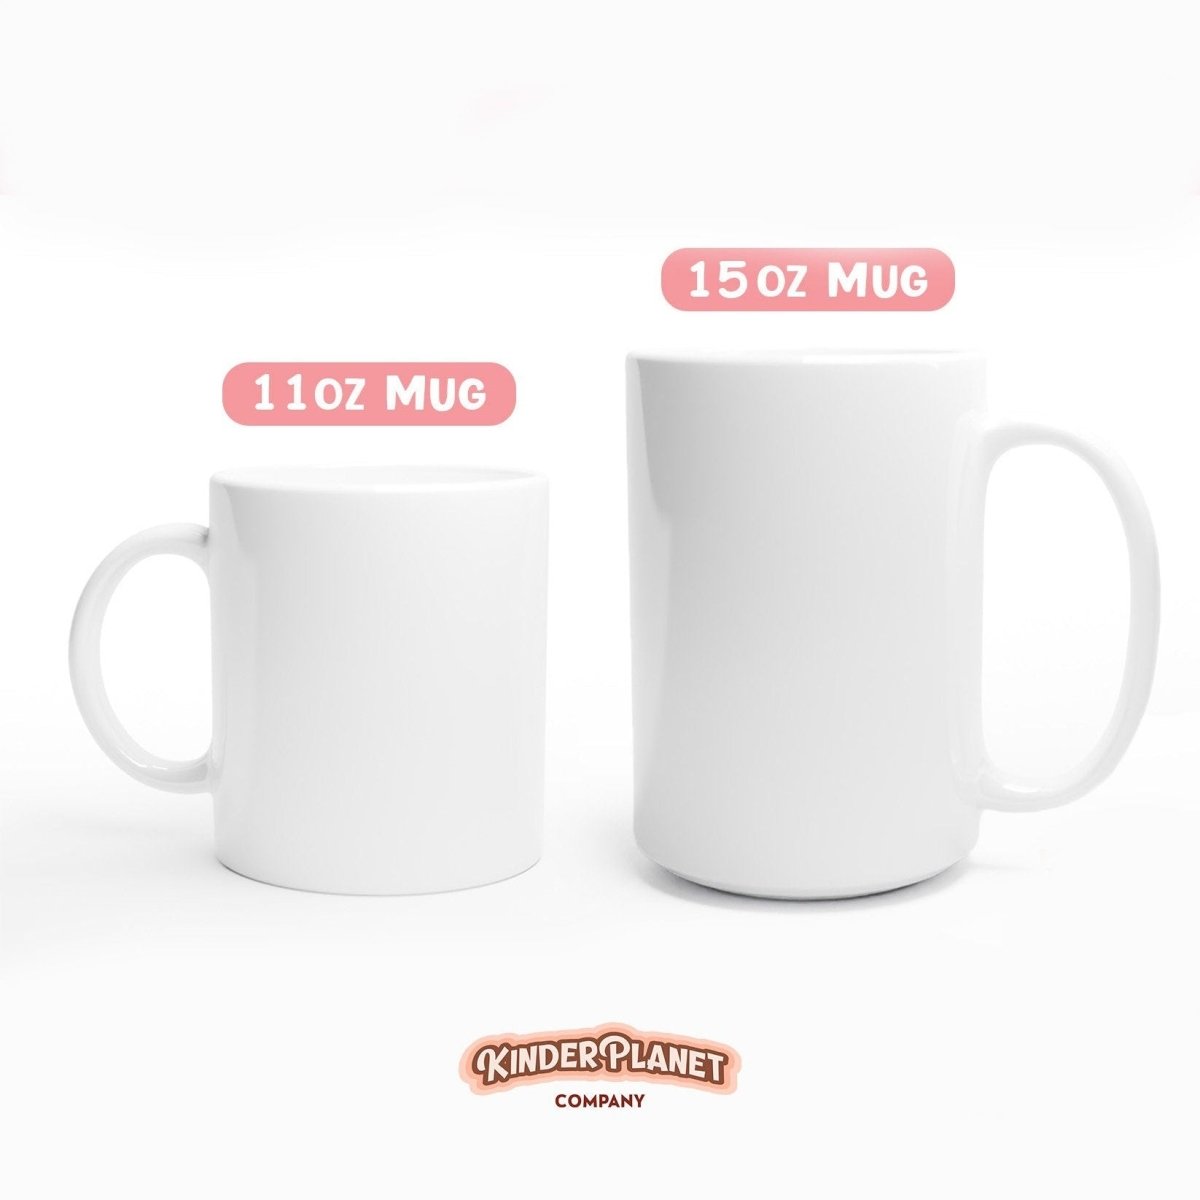 'Good Things Happen Over Coffee' Mug - Mugs - Kinder Planet Company